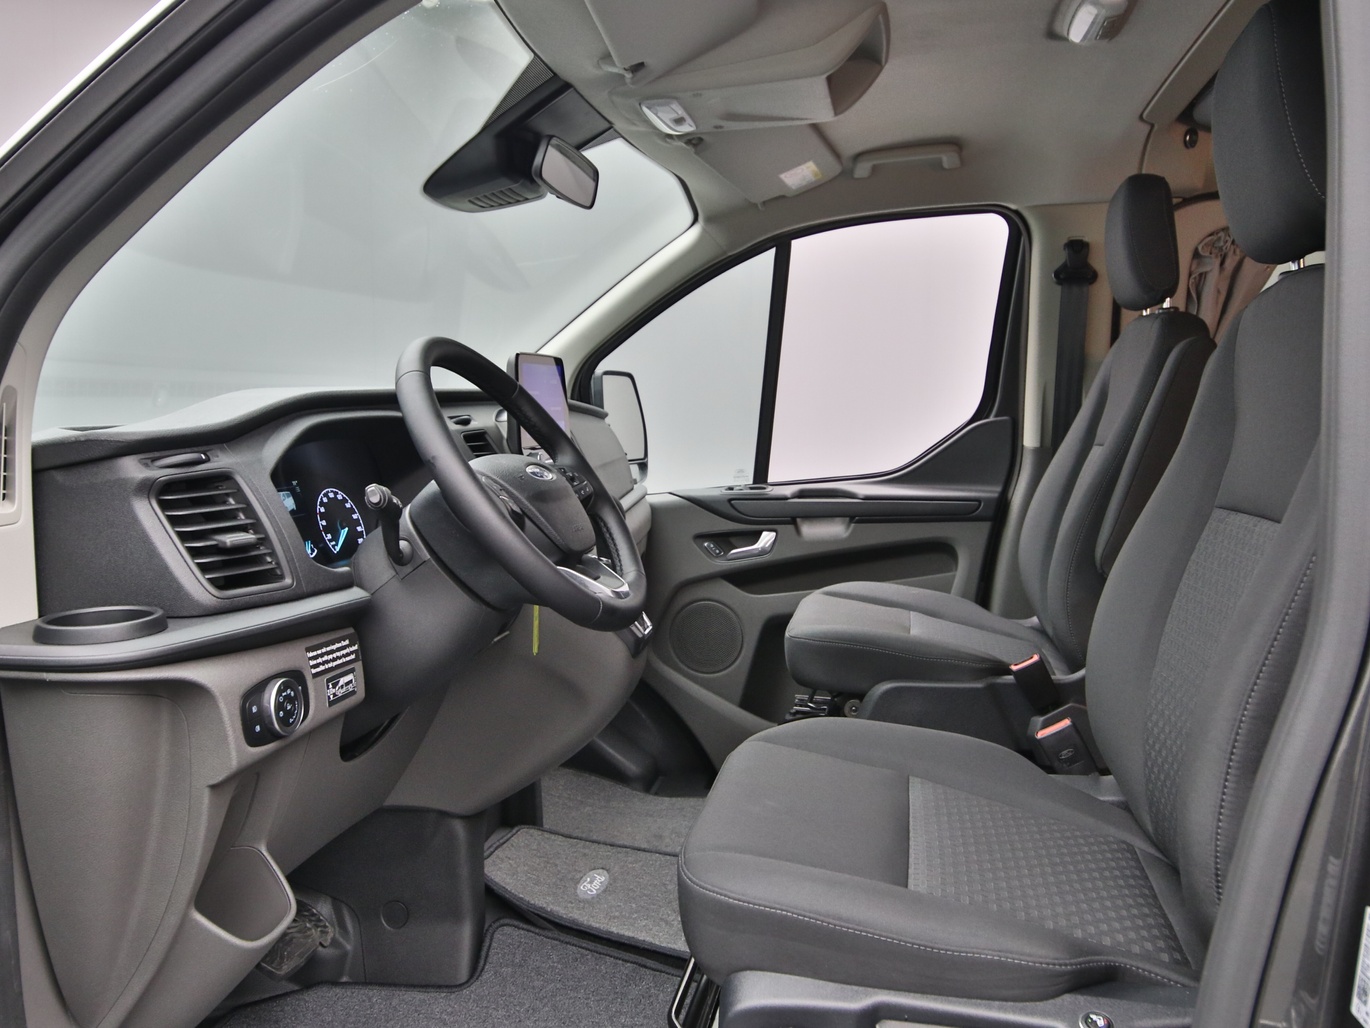  Ford Transit Nugget Aufstelldach 130PS Aut. in Magnetic Grau 